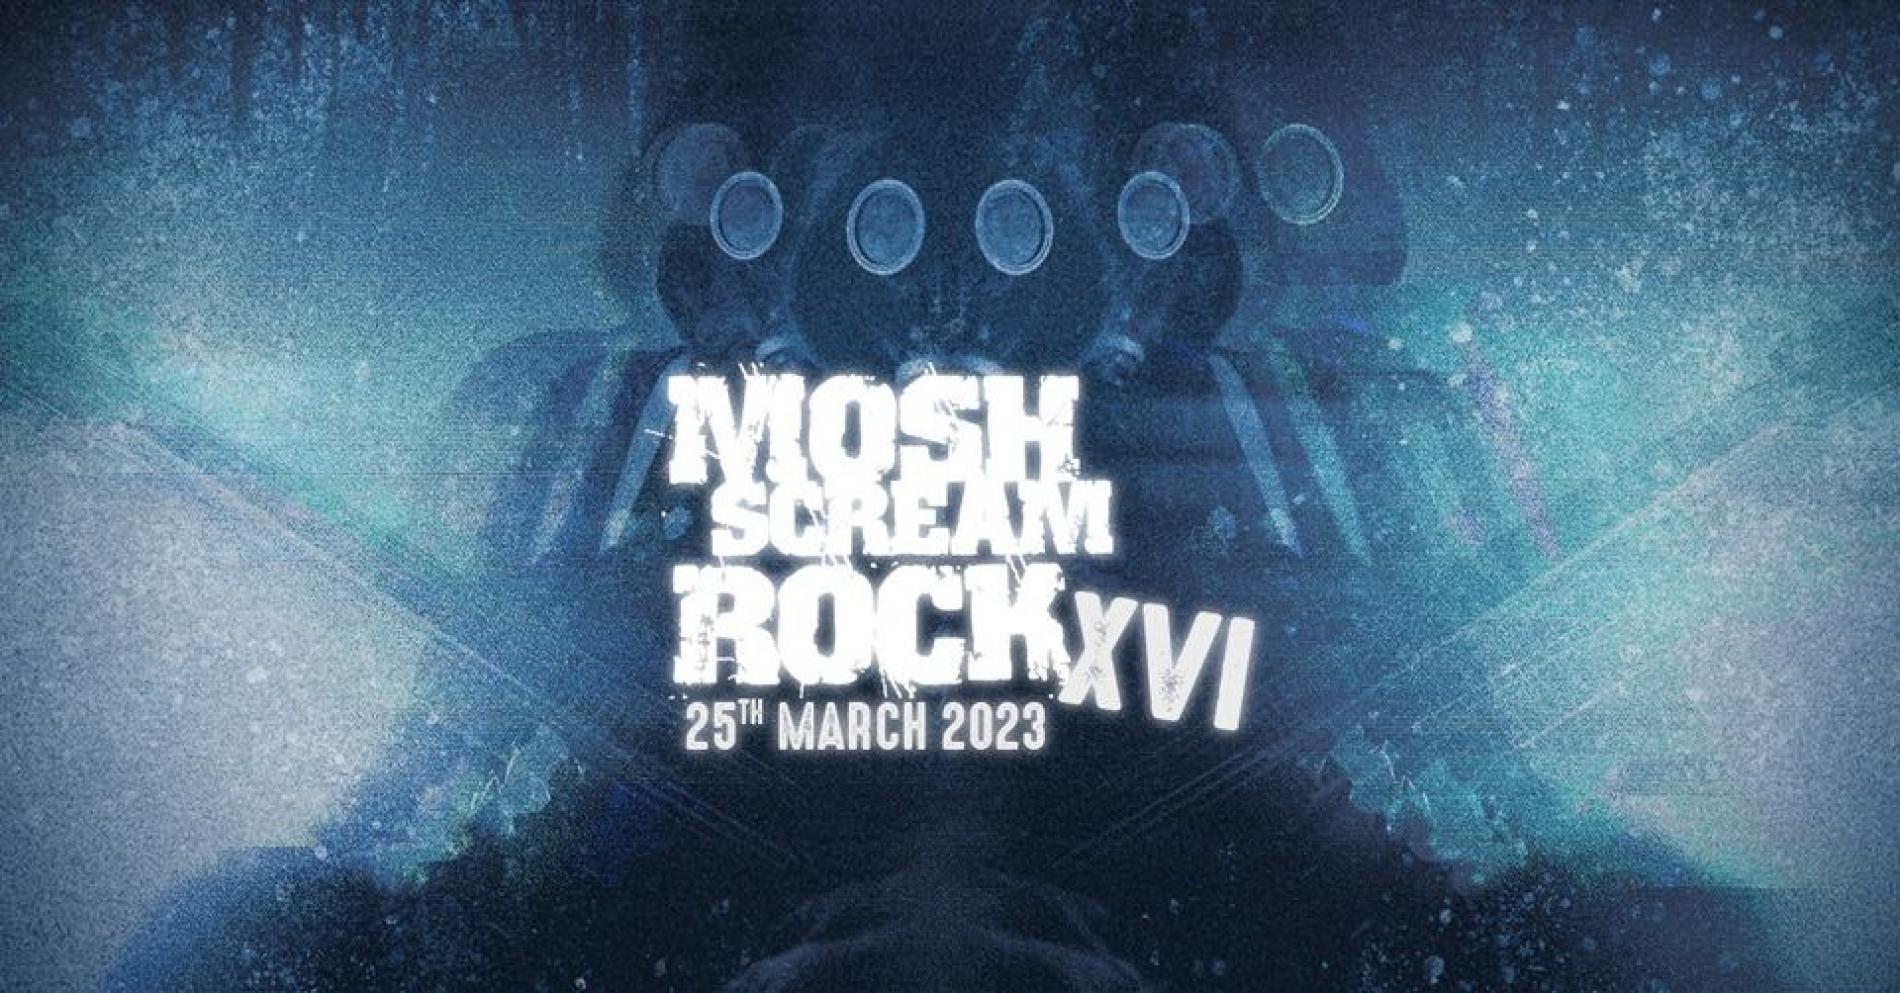 Mosh Scream Rock XVI